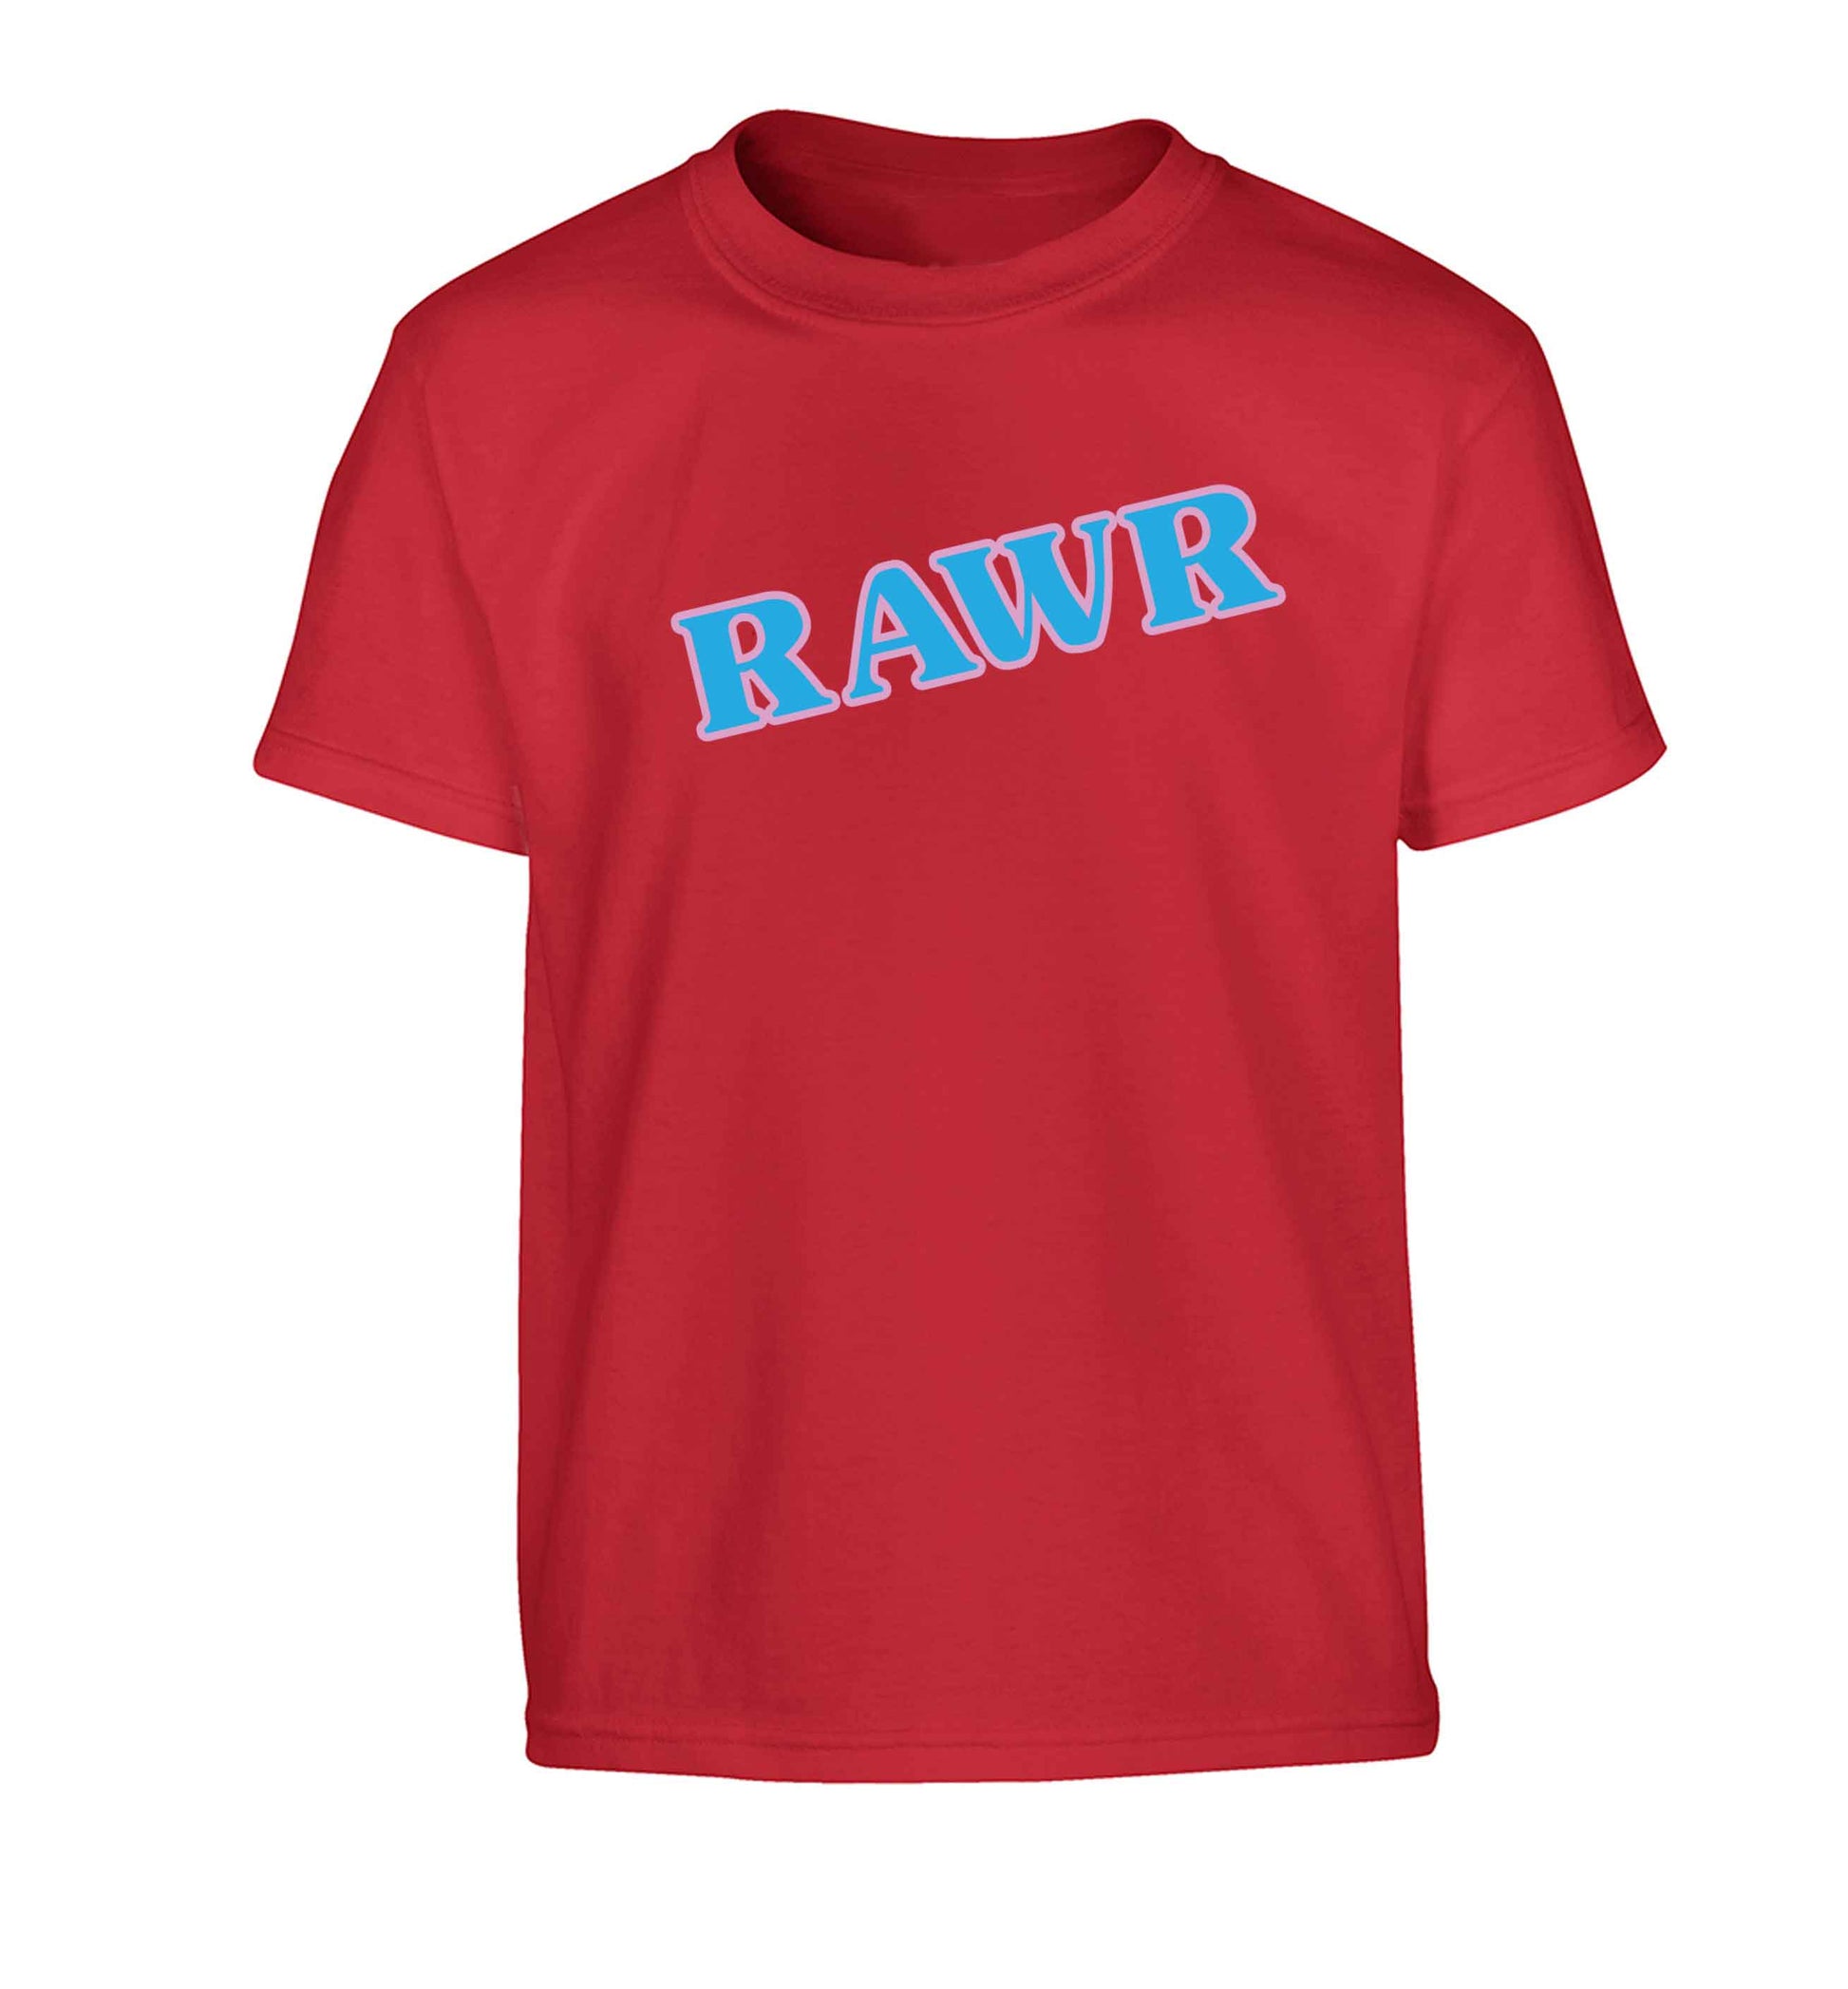 Rawr Children's red Tshirt 12-13 Years